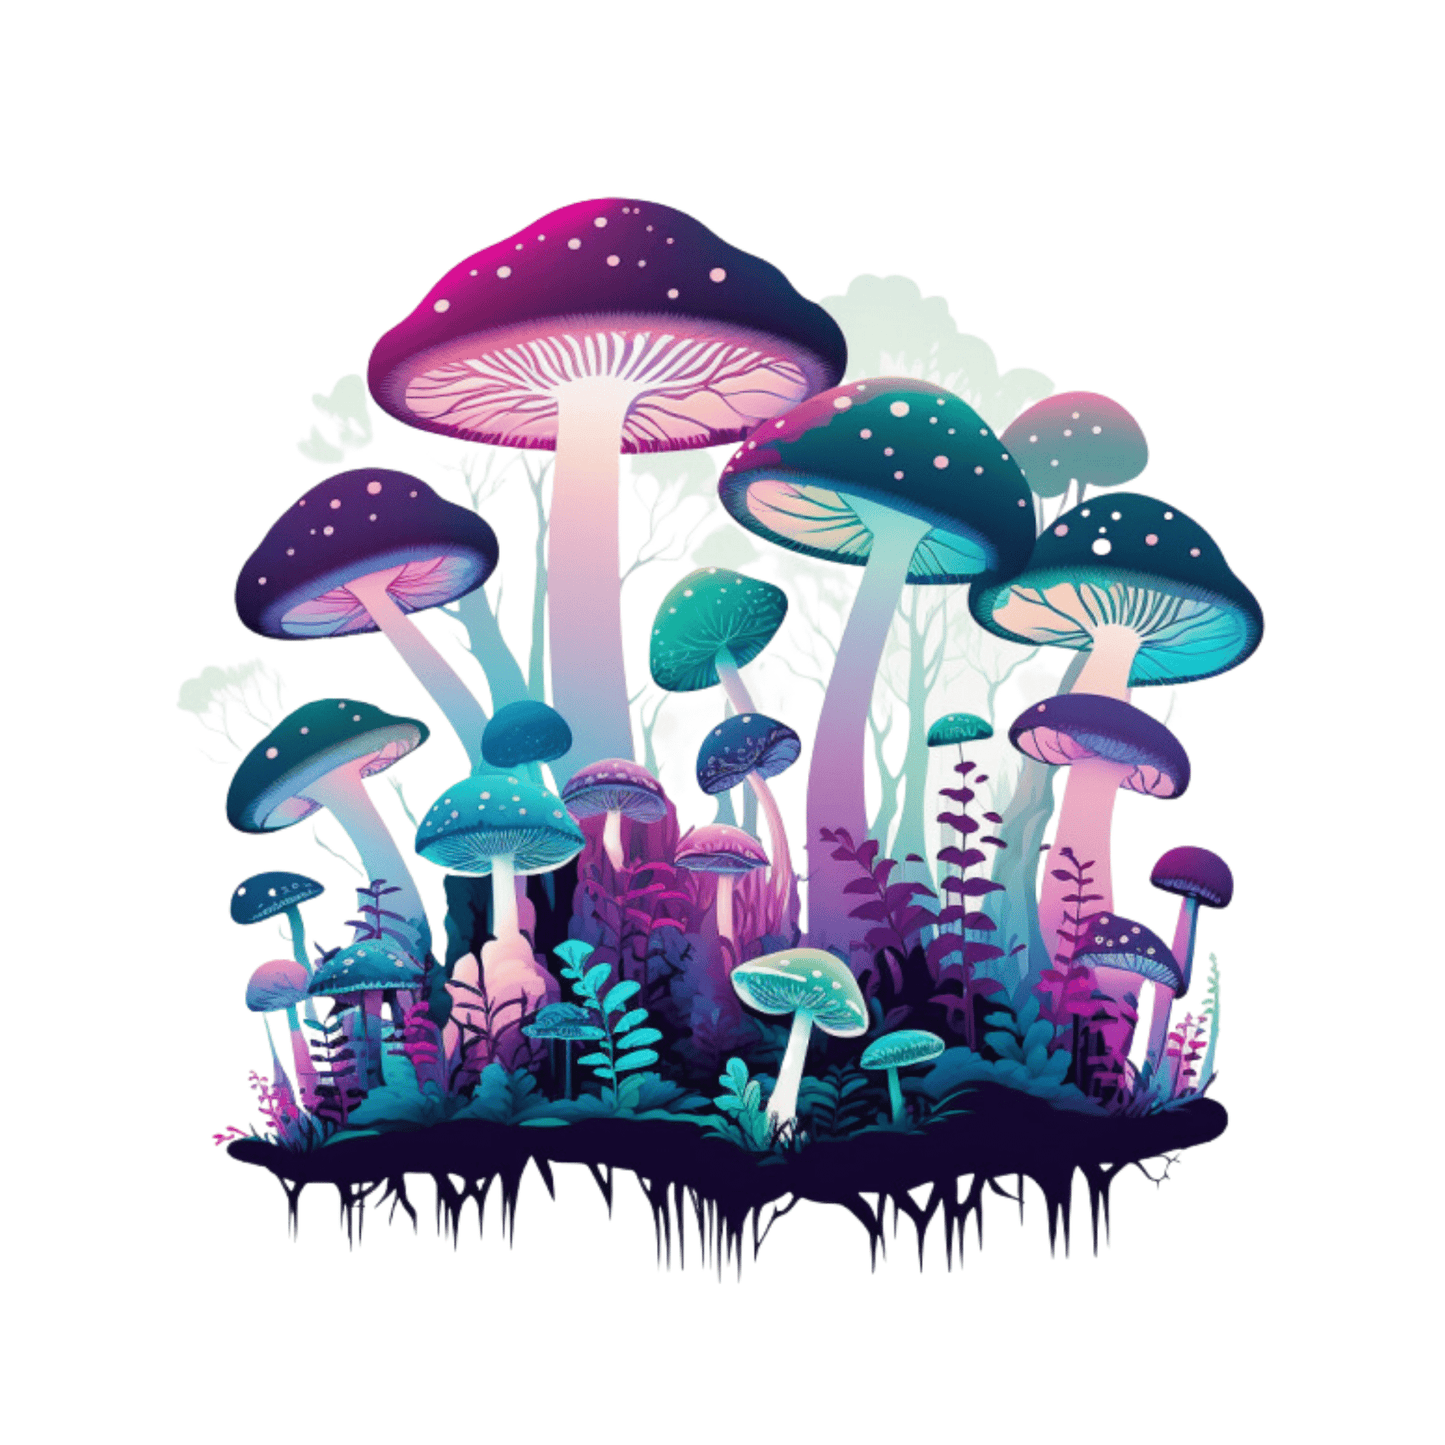 Mind-Bending Magical Mushroom Trip Images 2023 7 PNGs Set - Print on Demand Free Download - Instant Download